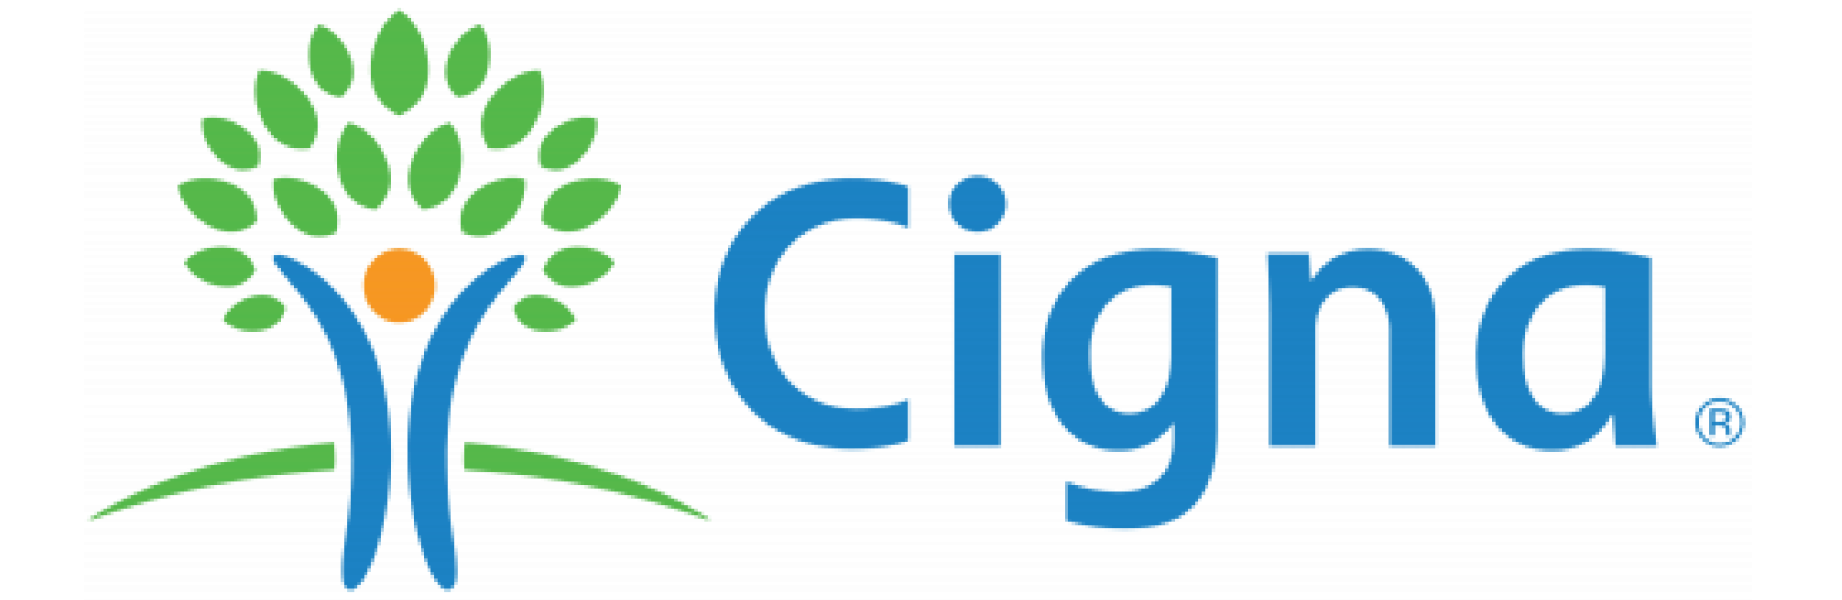 Visit Cigna Dental's website by clicking the logo